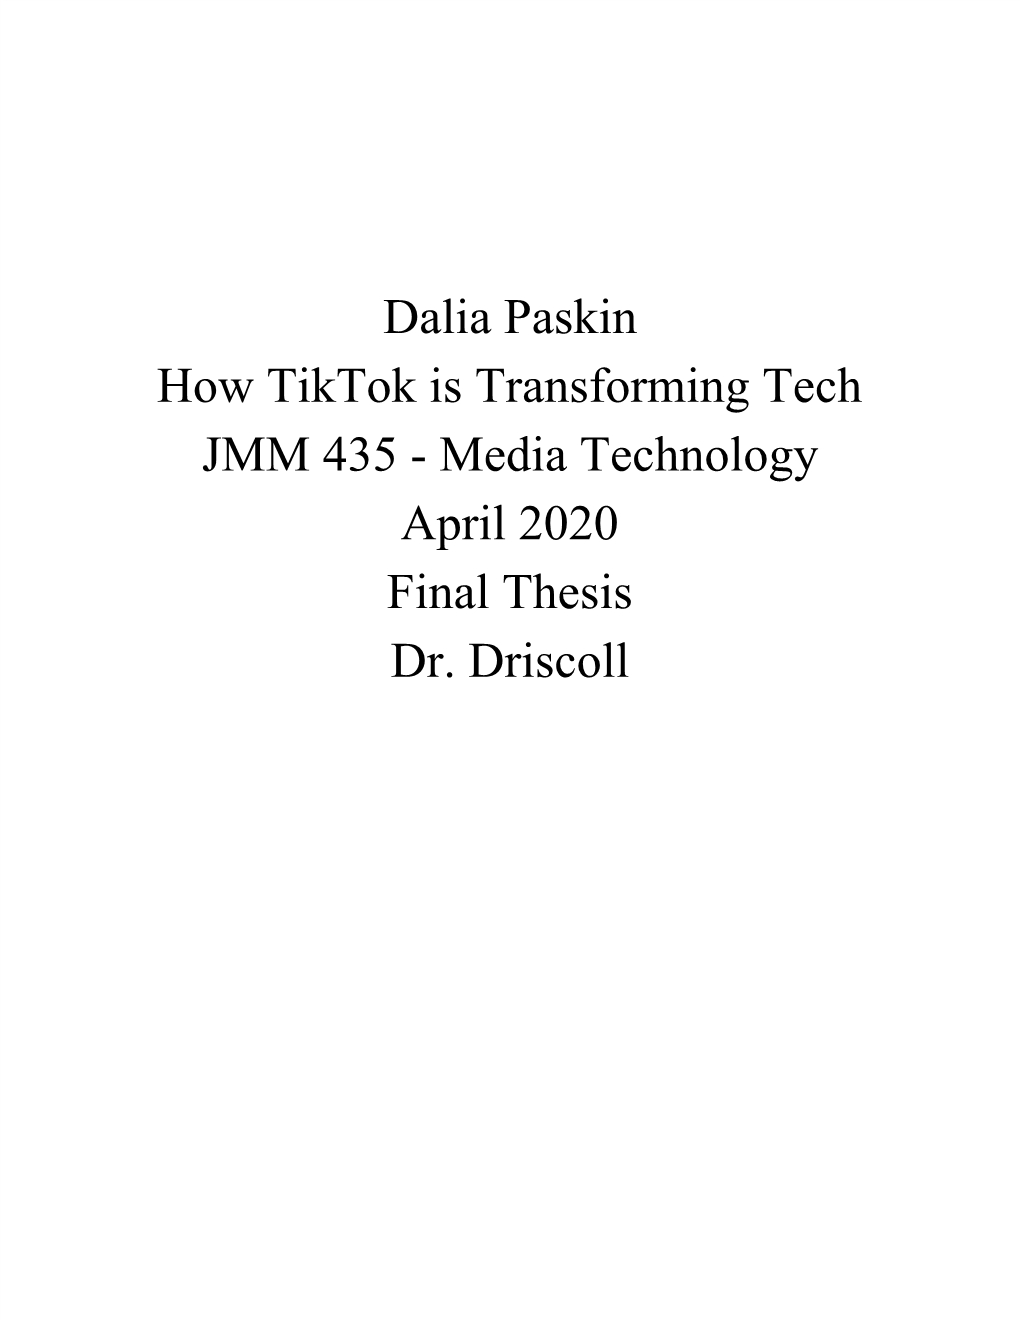 Dalia Paskin How Tiktok Is Transforming Tech JMM 435 - Media Technology April 2020 Final Thesis Dr